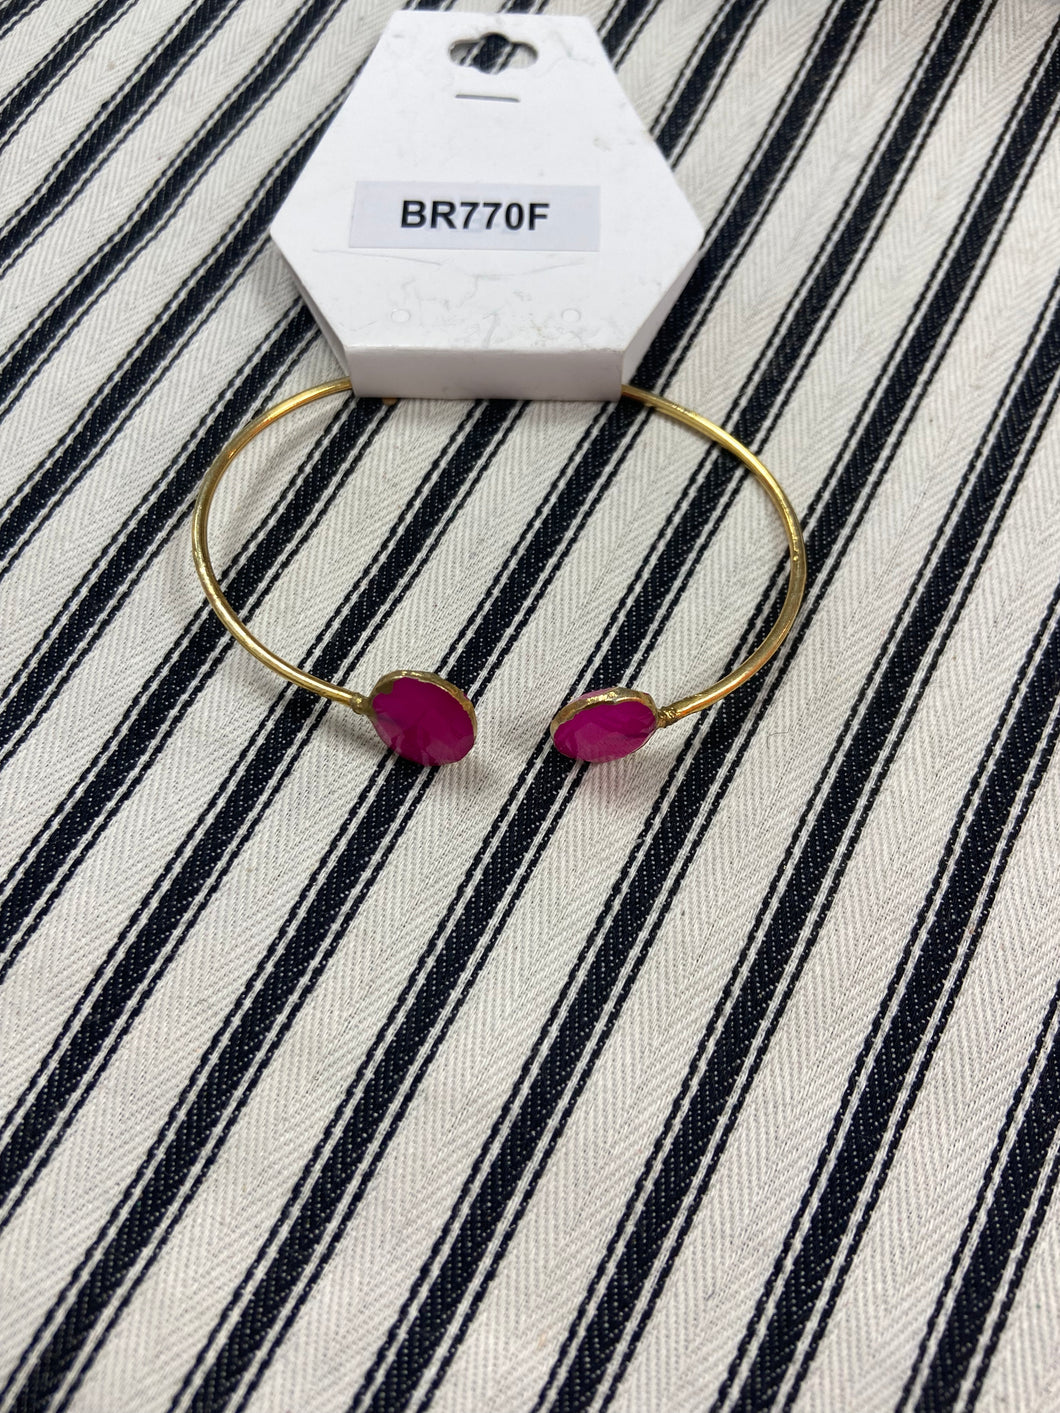 pink cuff bracelet